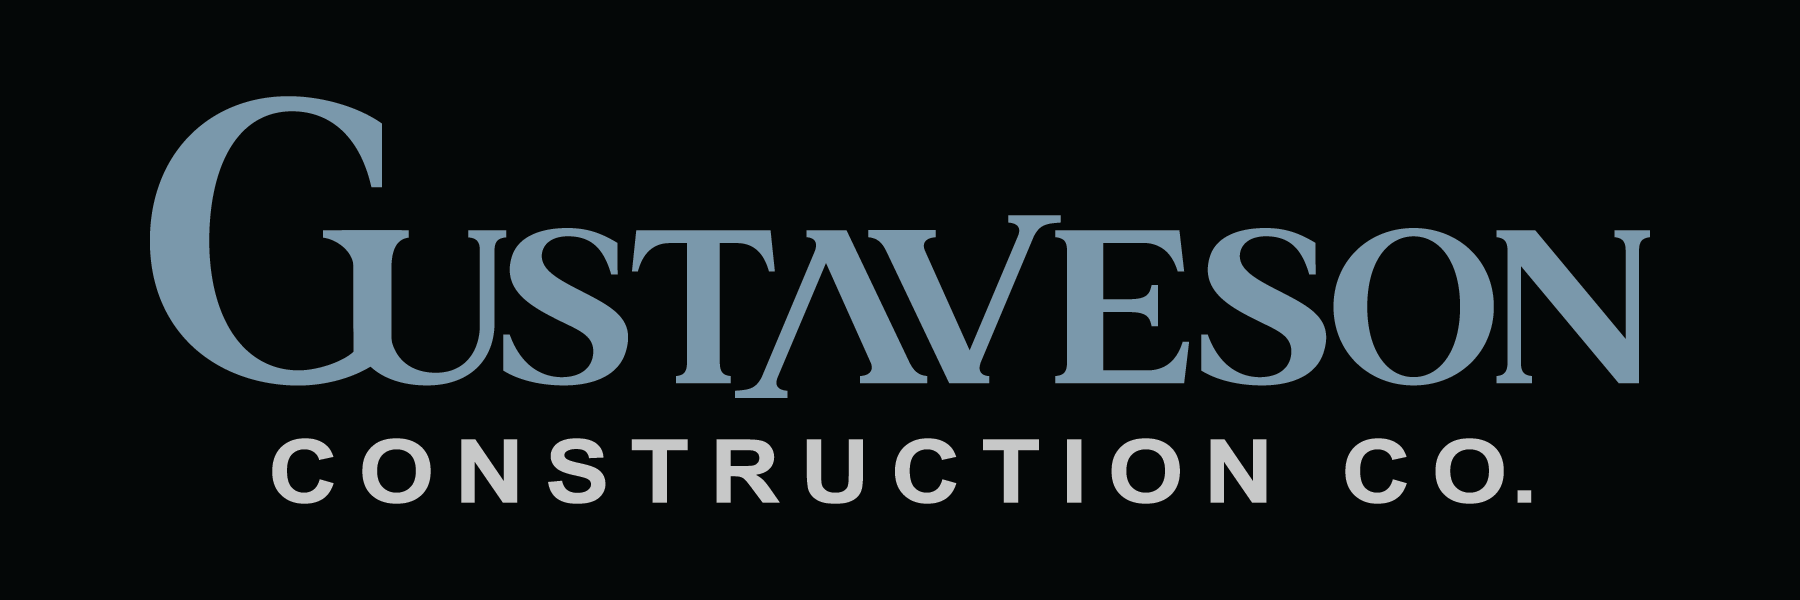 Gustaveson Construction